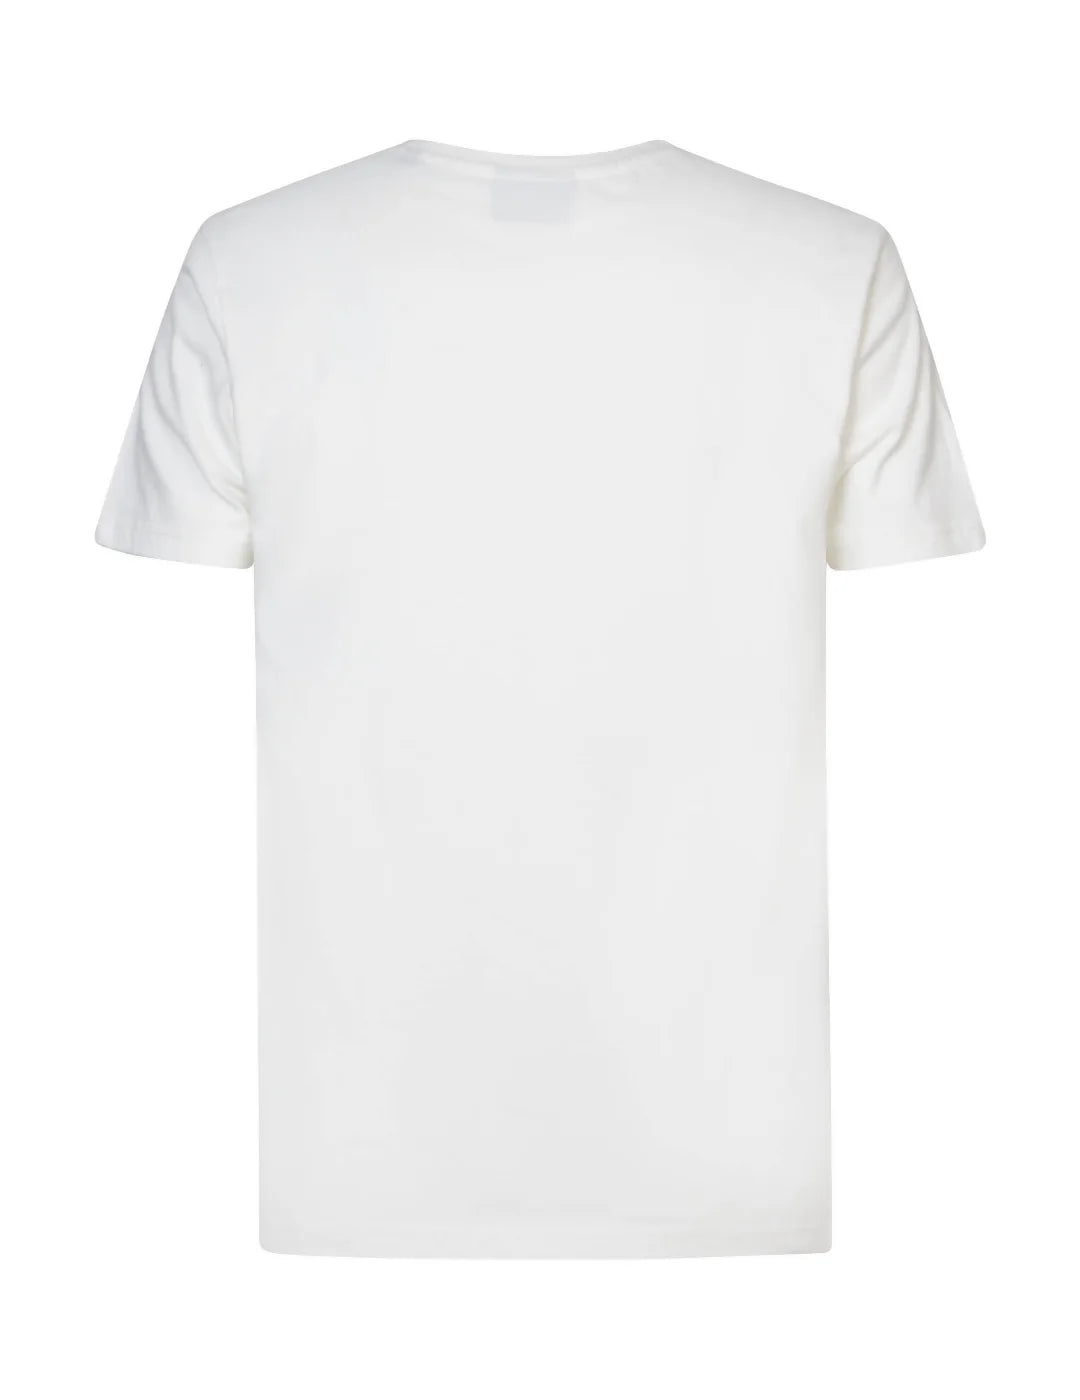 Camiseta Blanca Manga Corta Petrol Industries | Bicos de Fío